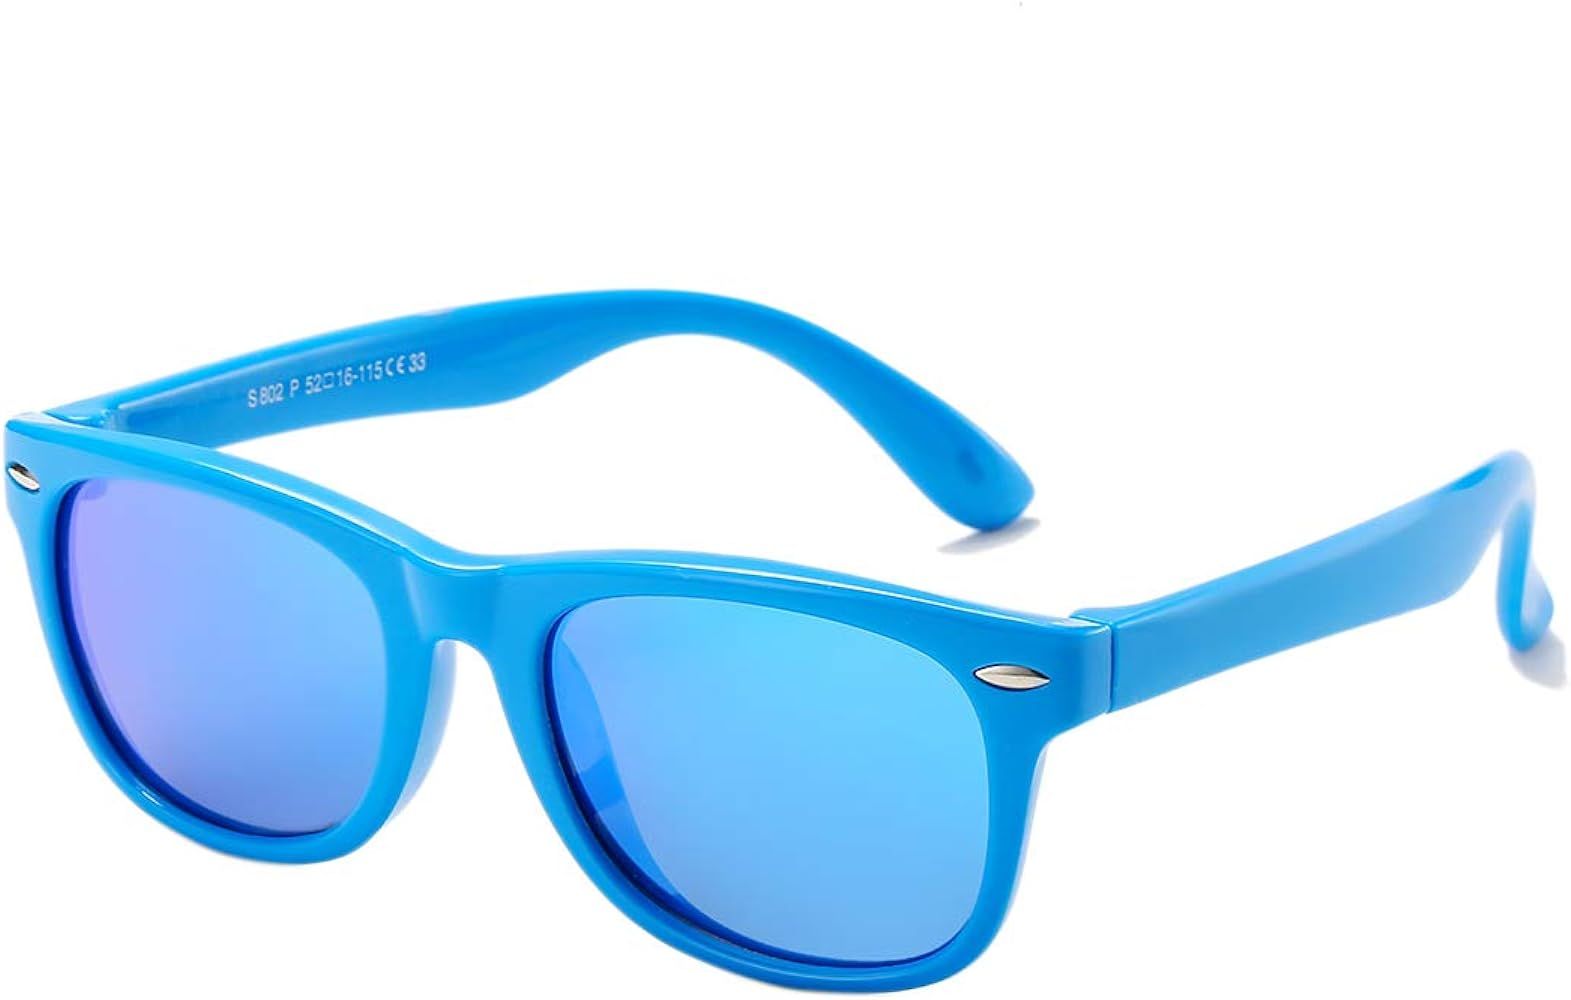 AZORB Kids Polarized Sunglasses TPEE Rubber Flexible Frame for Boys Girls Age 3-10, 100% UV Protecti | Amazon (US)